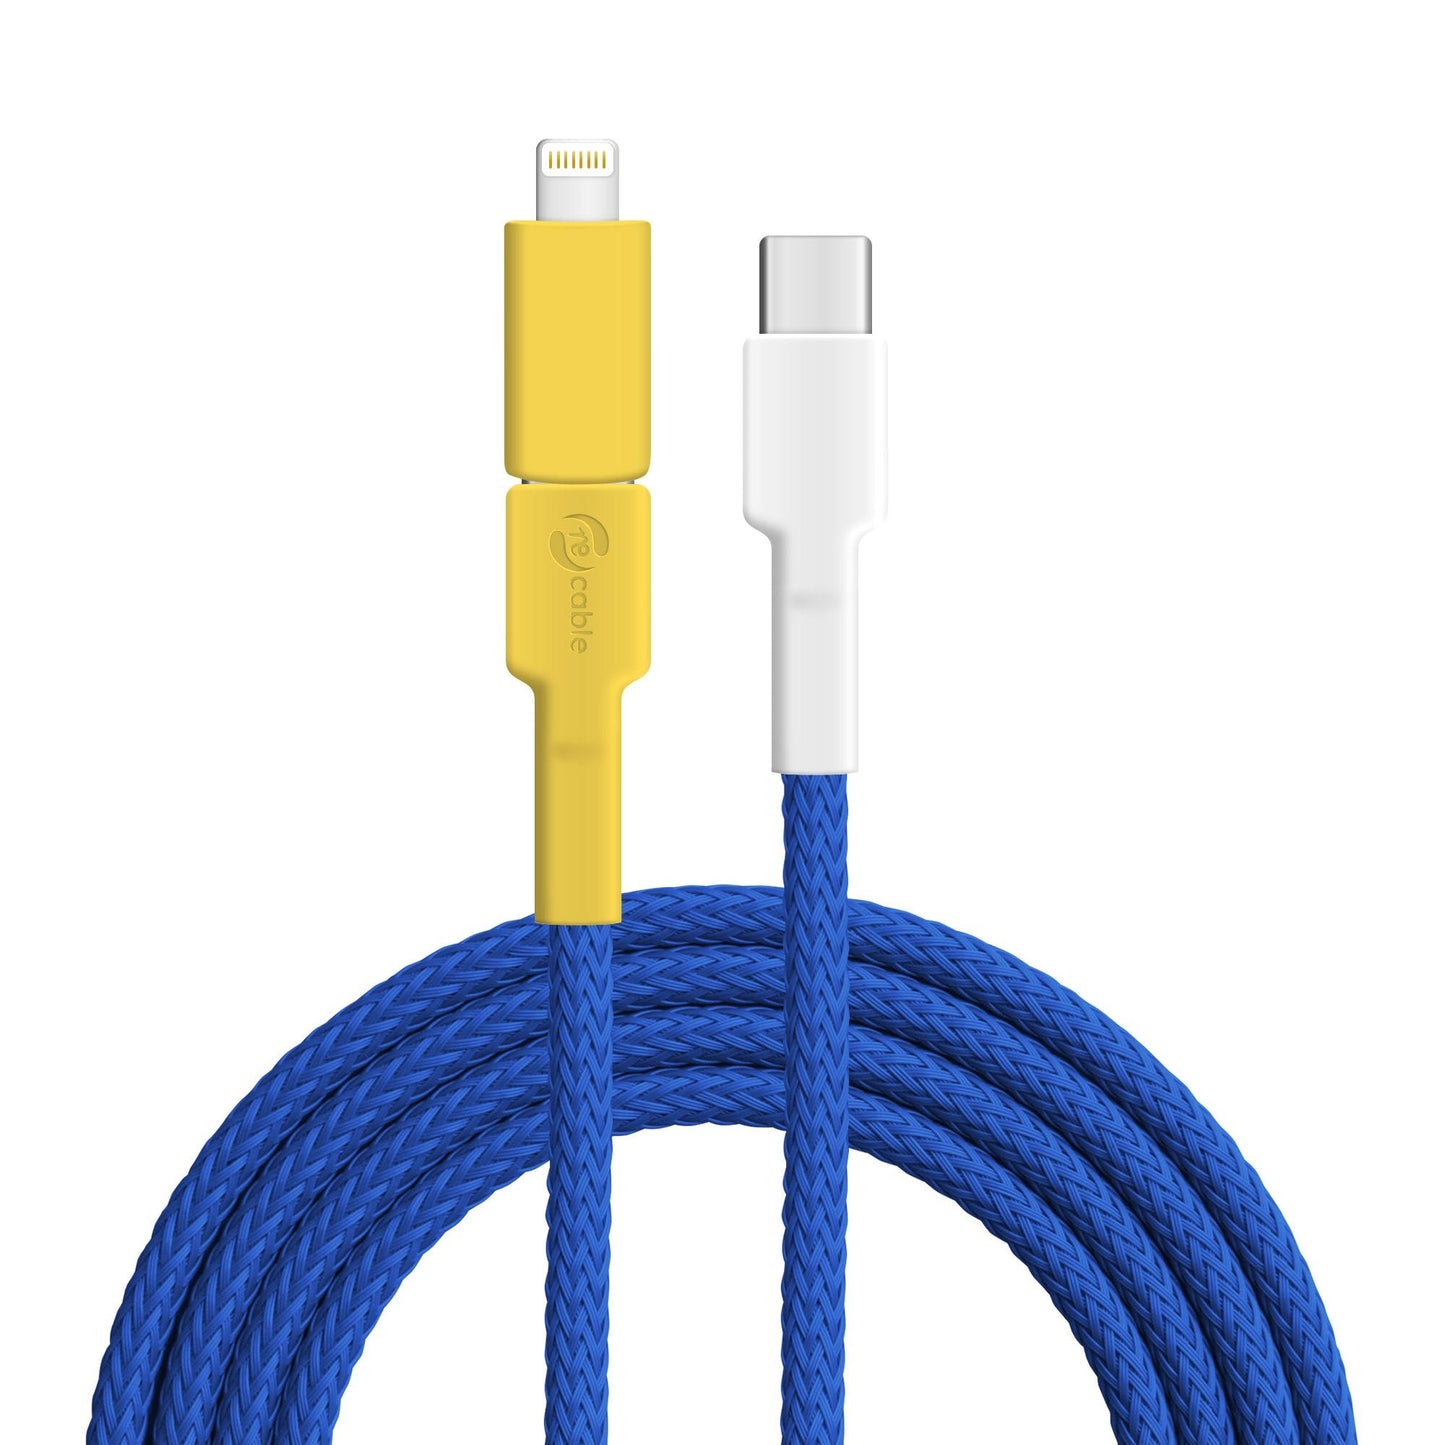 USB-Kabel, Design: Blaumeise, Anschlüsse: USB C auf USB C mit Lightning Adapter (verbunden)